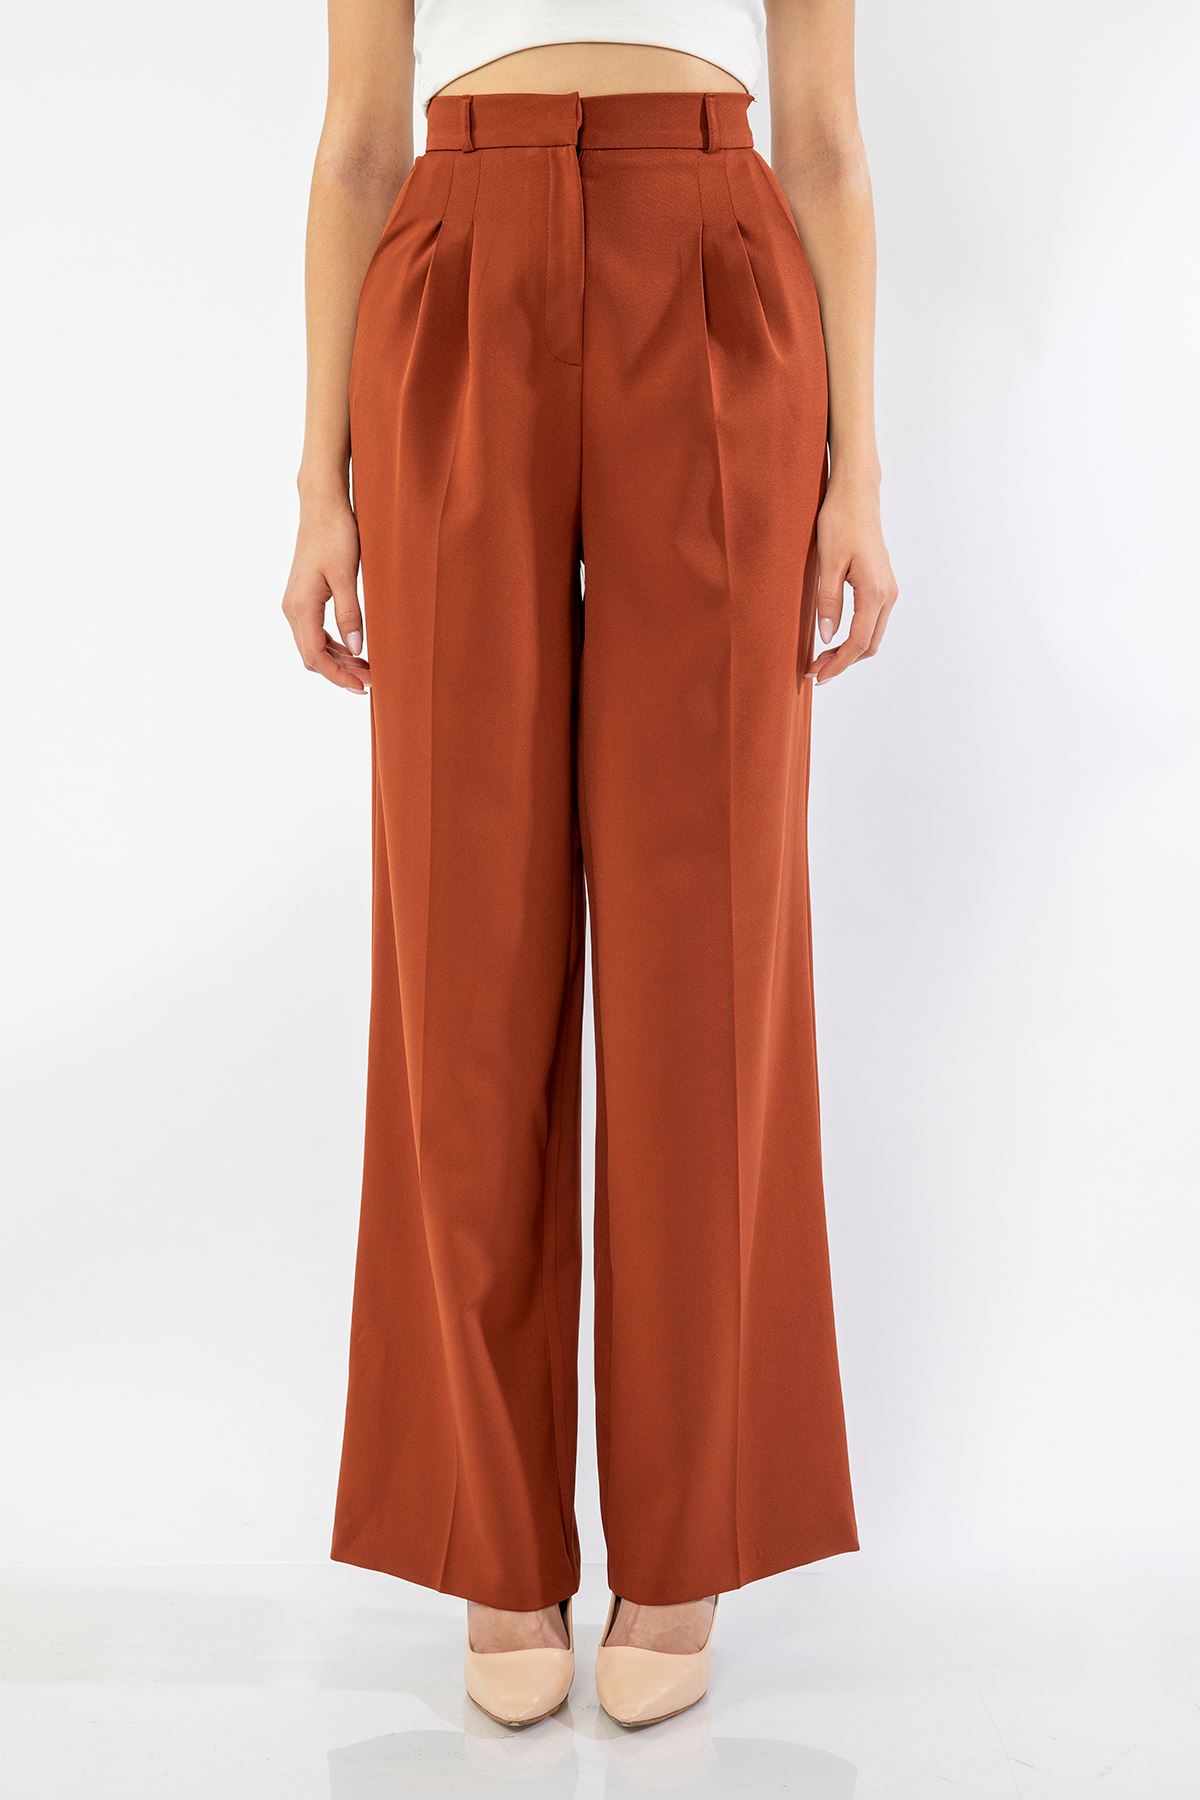 Atlas Fabric Maxi Wide Palazzo Women'S Trouser - Light Brown